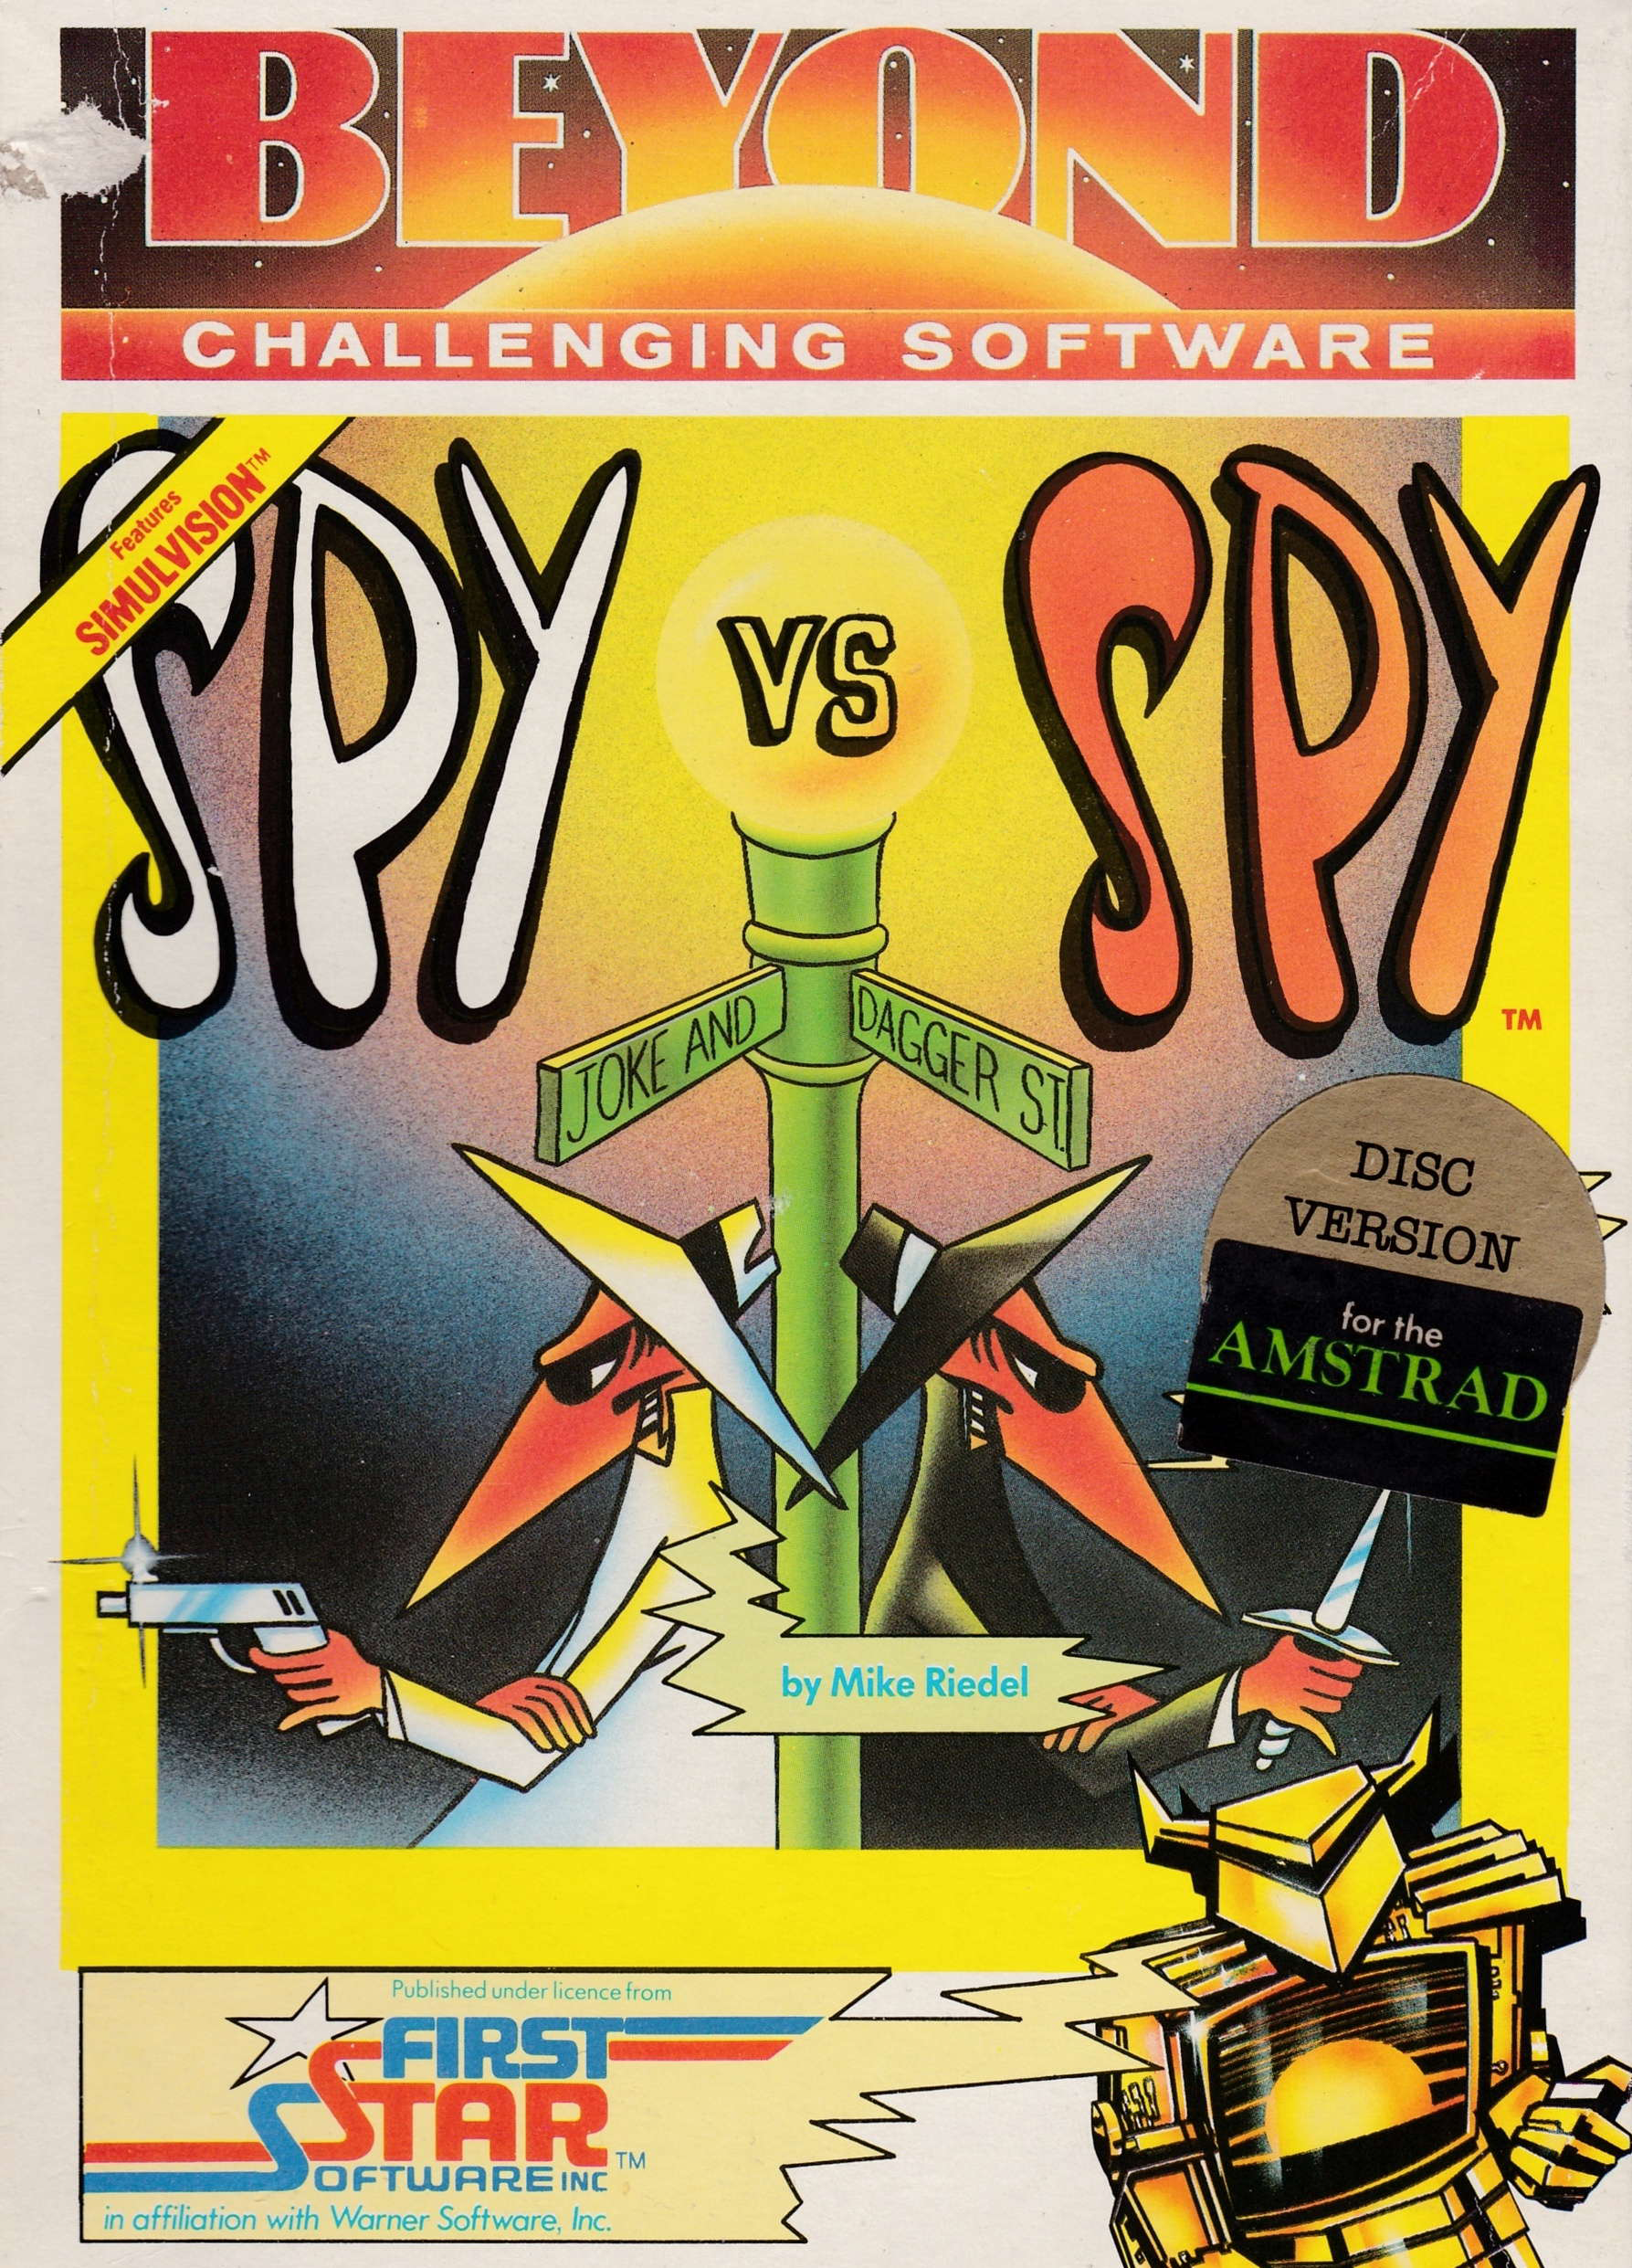 cover of the Amstrad CPC game Spy Vs Spy  by GameBase CPC